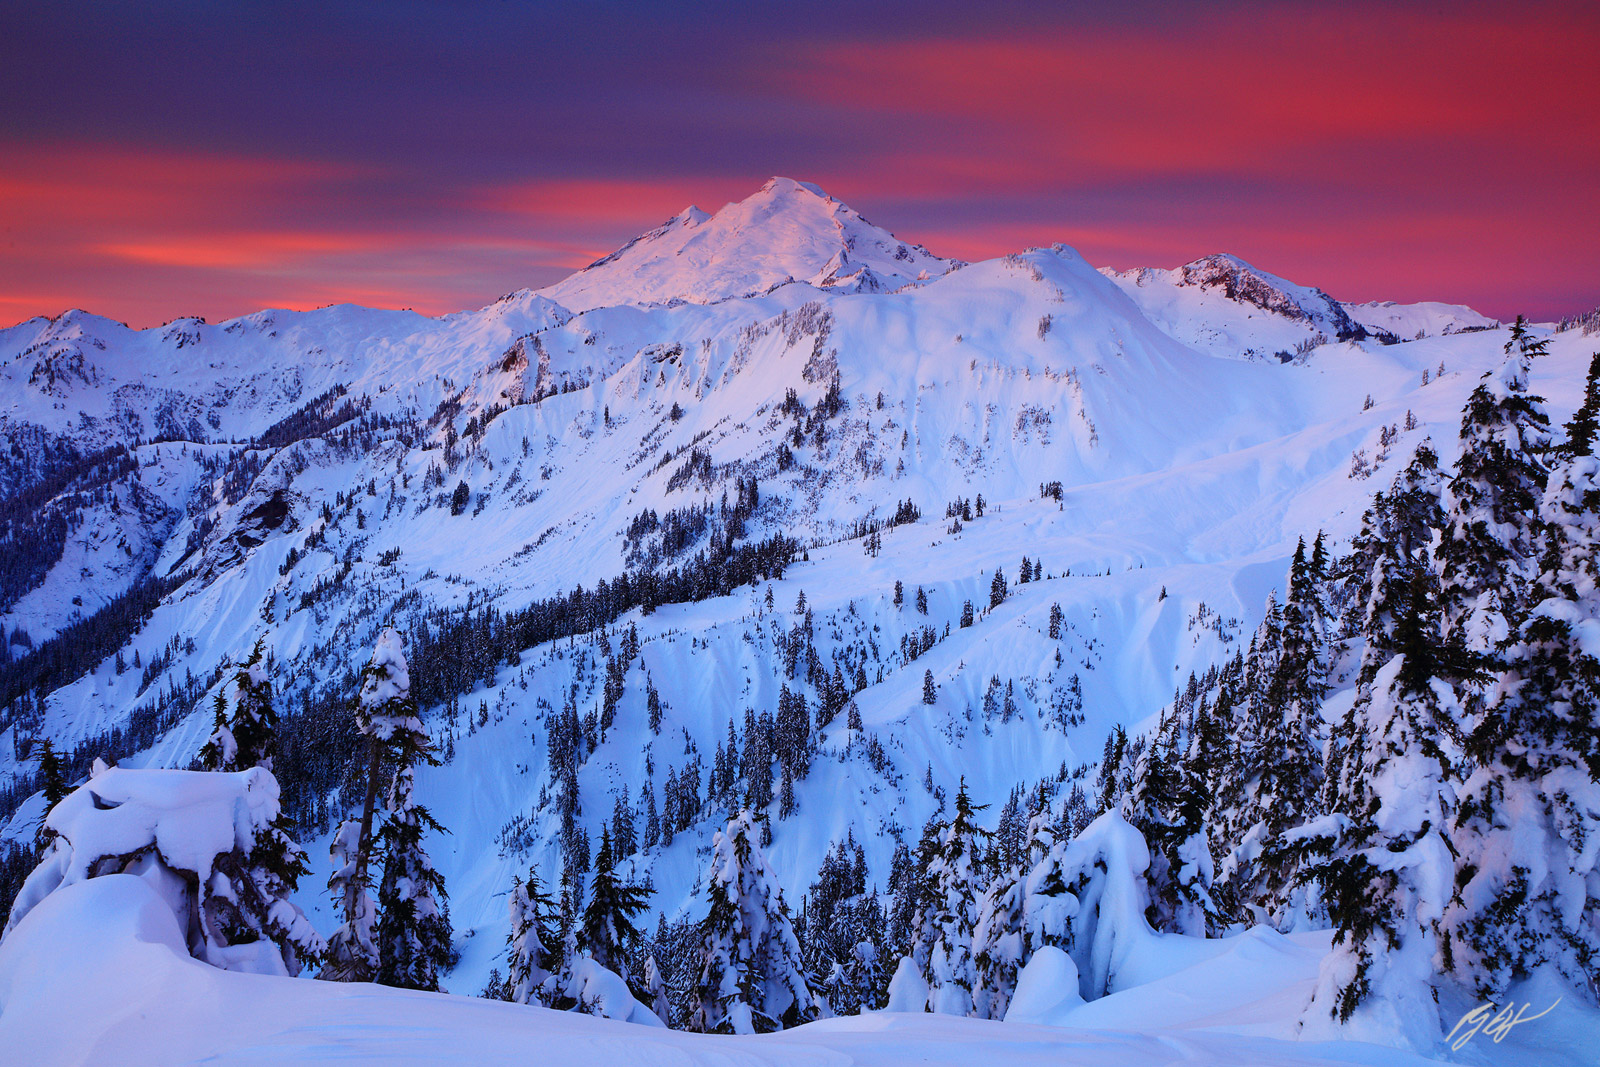 Winter Sunrise on Mt Baker from Artist Ridge in the Mt Baker National Recreation Area in Washington